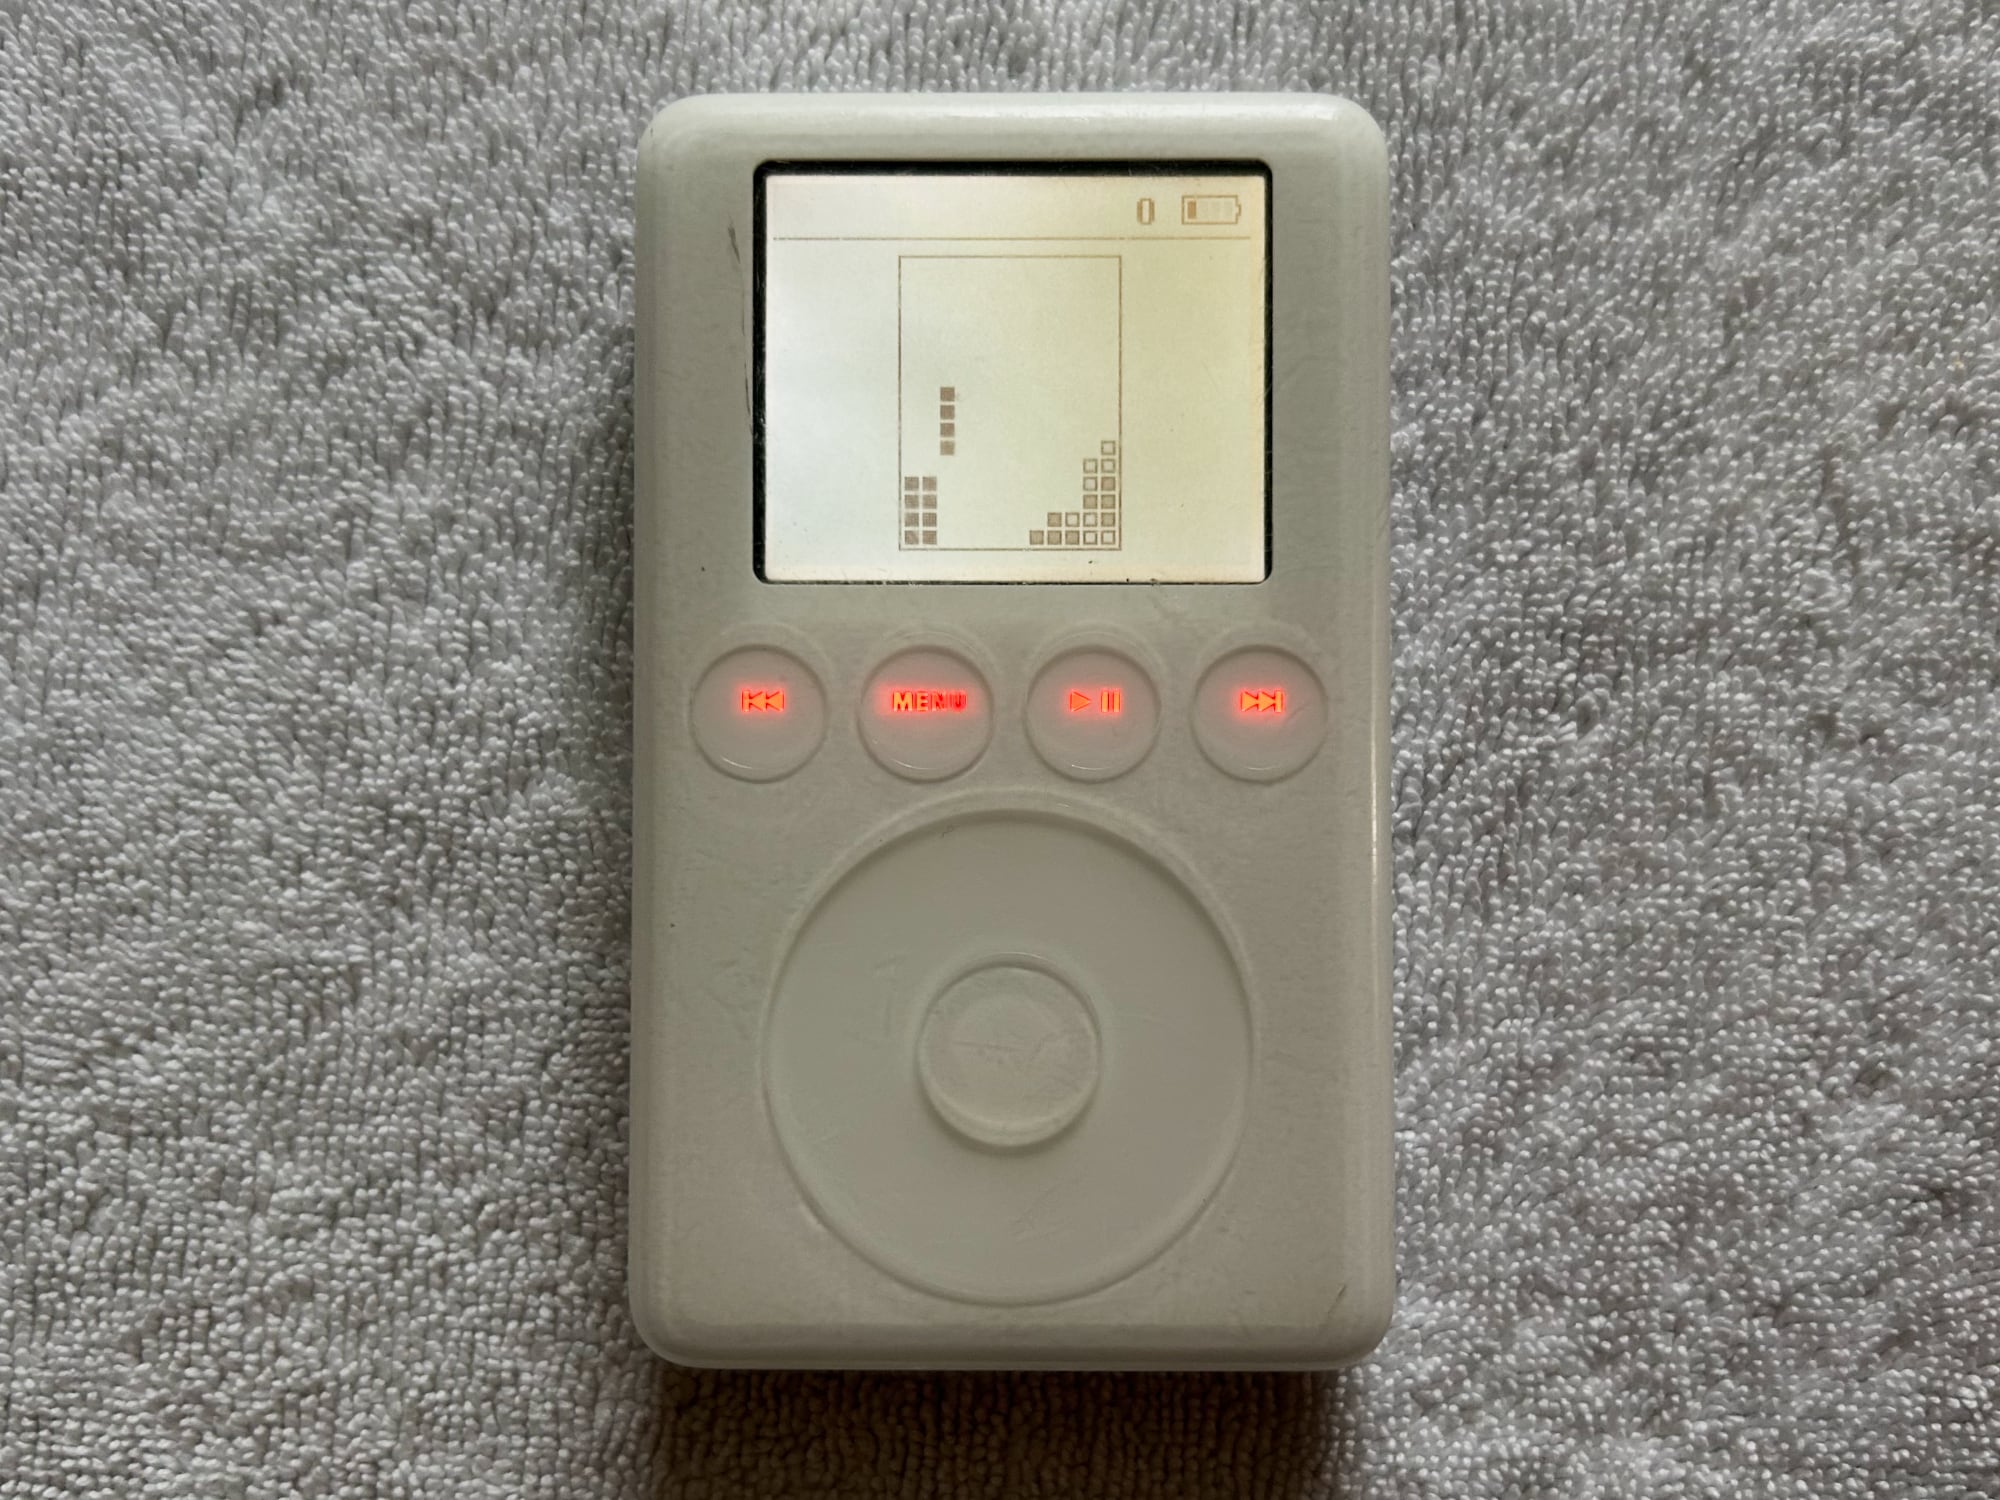 Prototype iPod Features Apple-Designed Tetris Clone Called ‘Stacker’